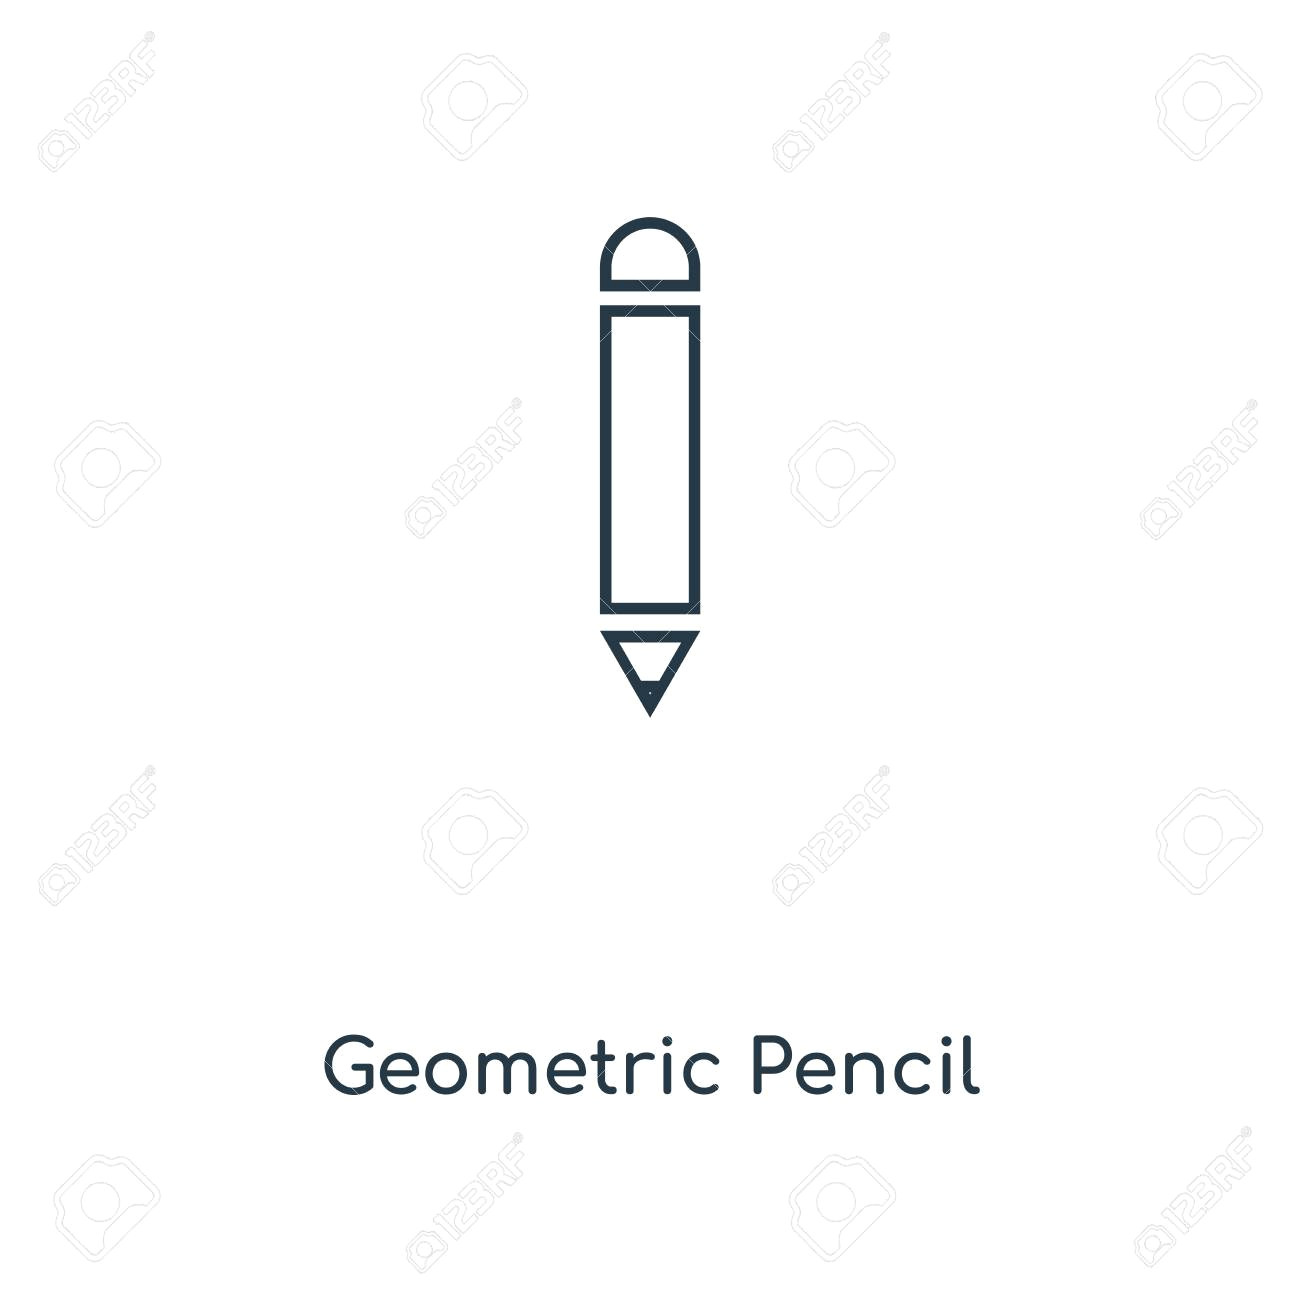 Creative Easy Pencil Drawing Geometric Pencil Concept Line Icon Linear Geometric Pencil Concept